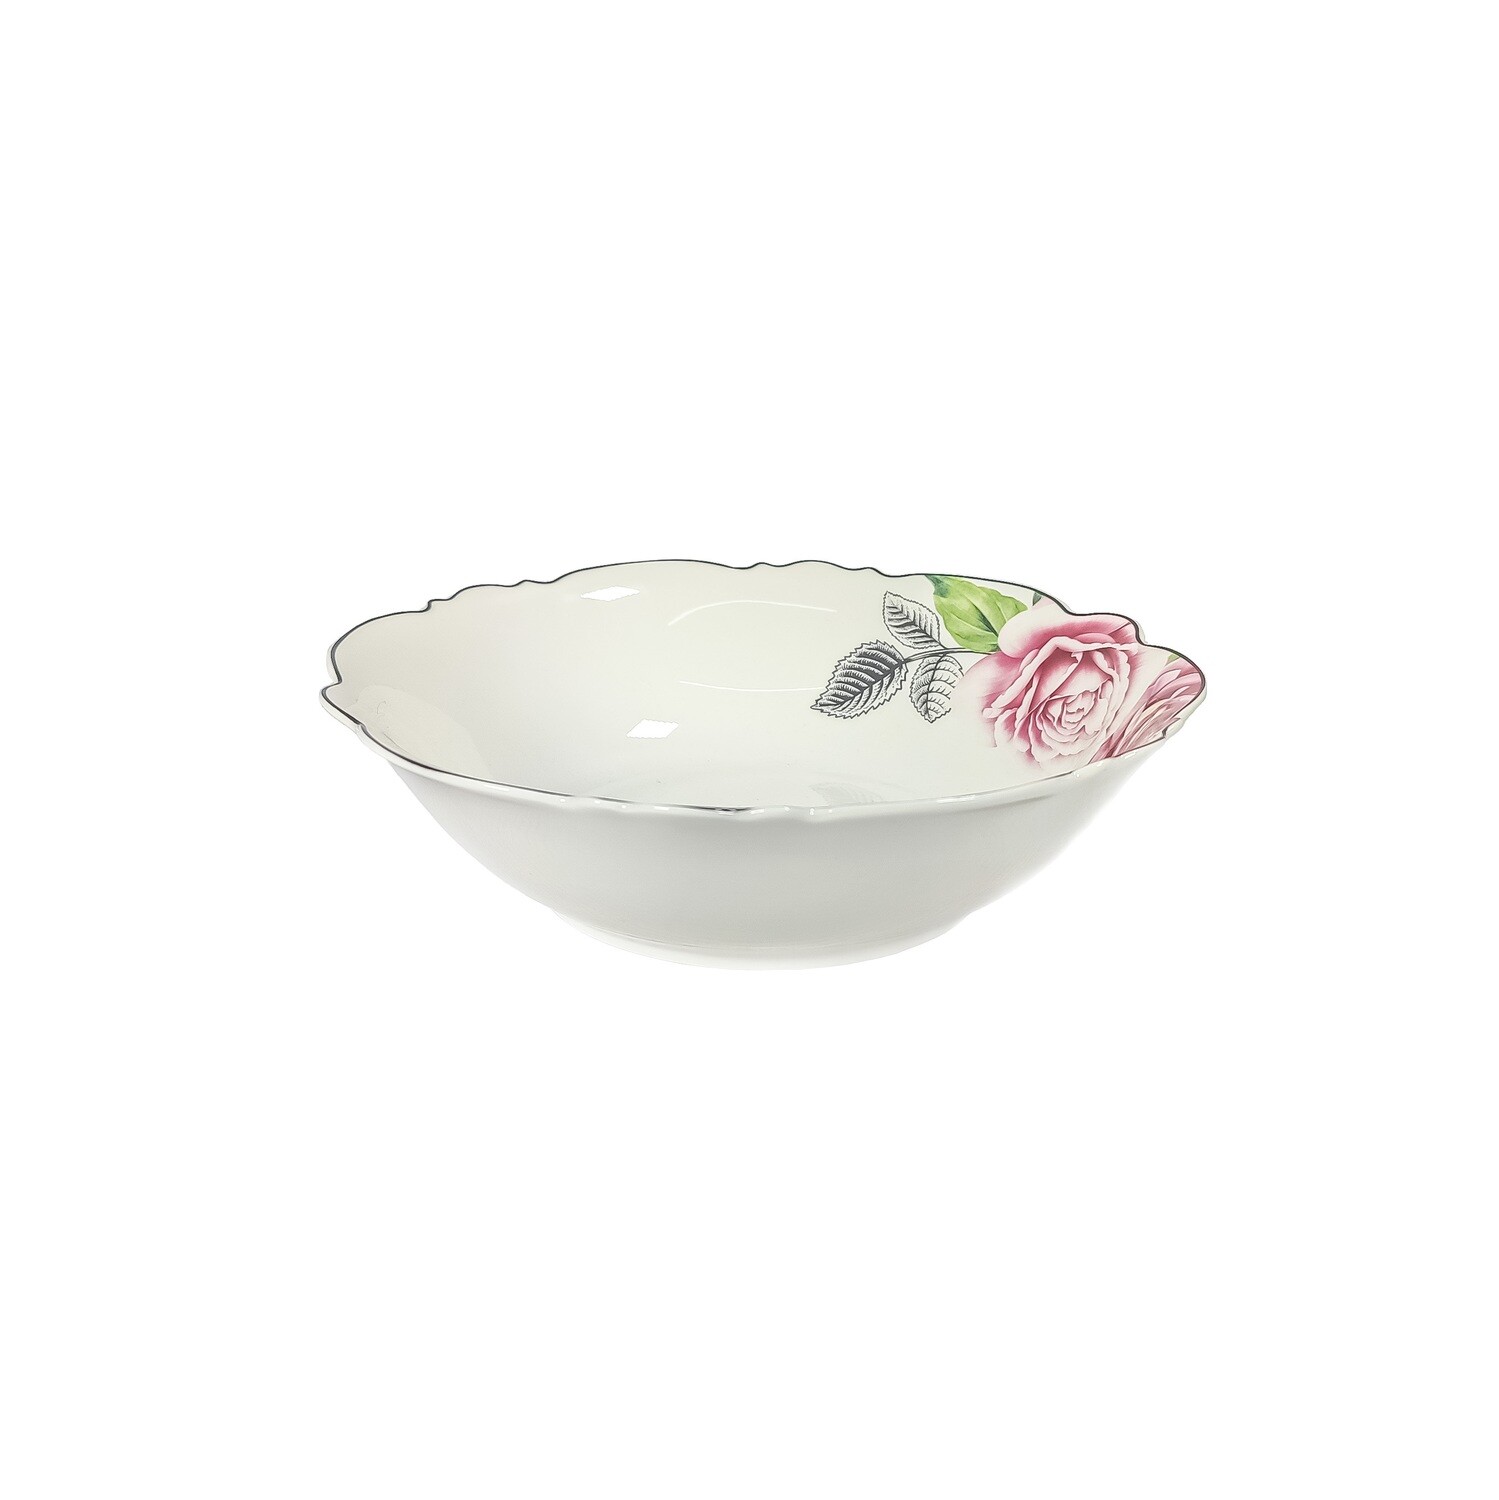 JENNA CLIFFORD - Wavy Rose Cereal Bowl 17.8cm